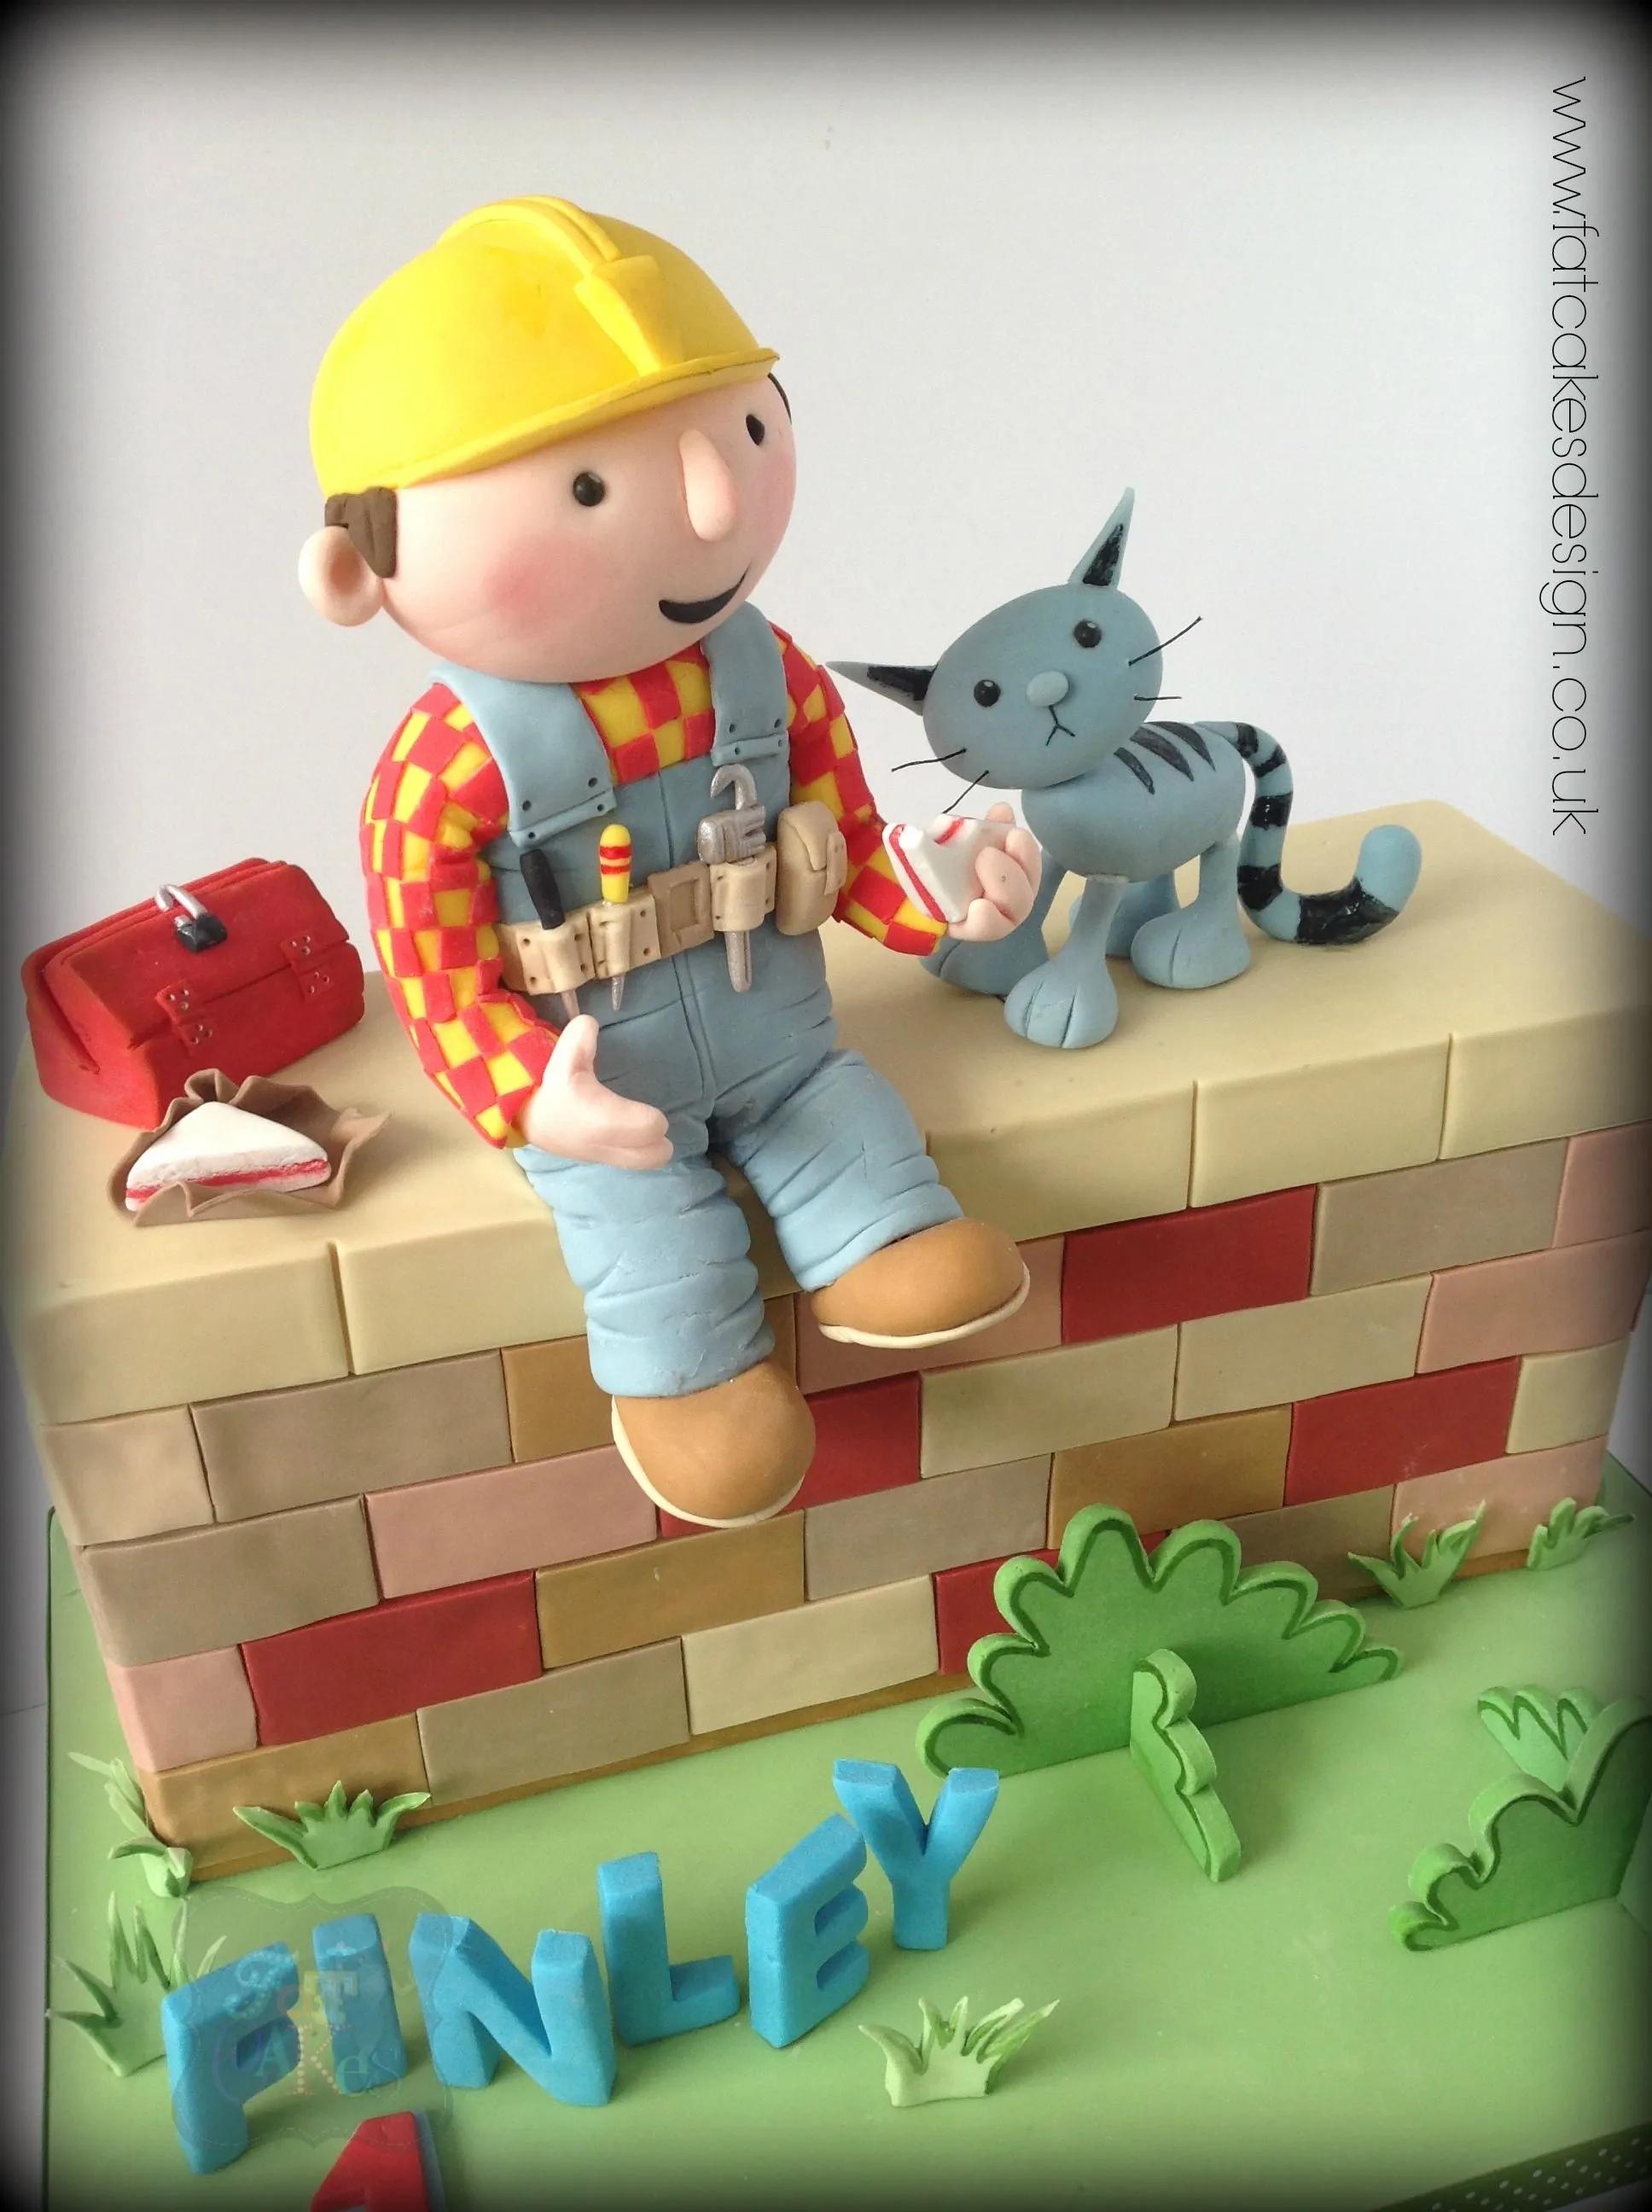 Bob the builder cake, bob the builder model, | Bob the builder cake ...